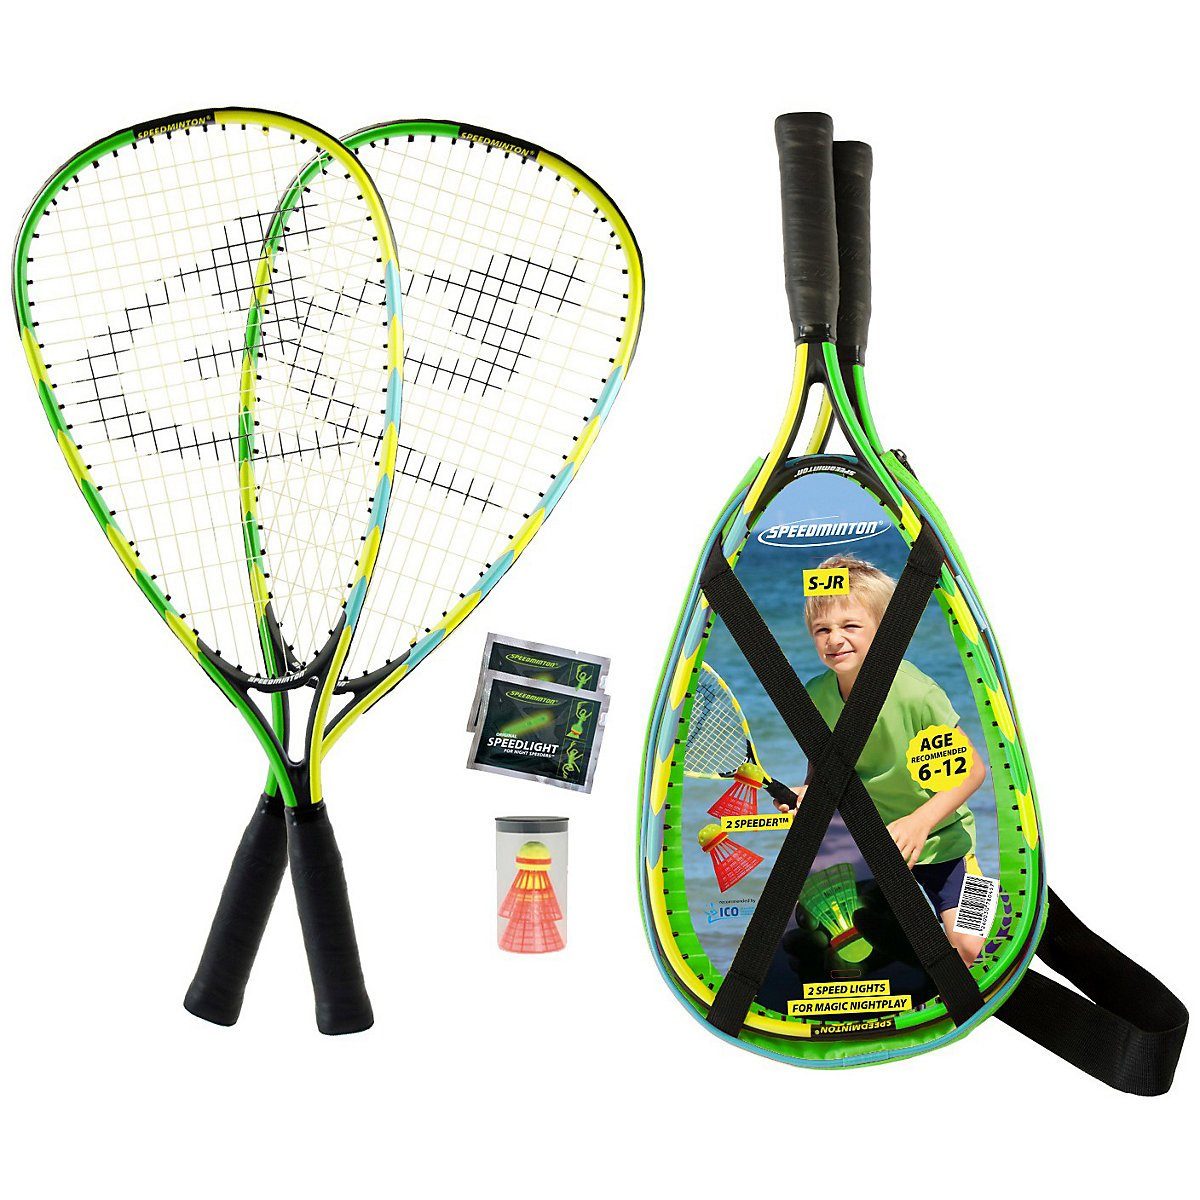 Speedminton Badmintonschläger »Set S-JR« online kaufen | OTTO